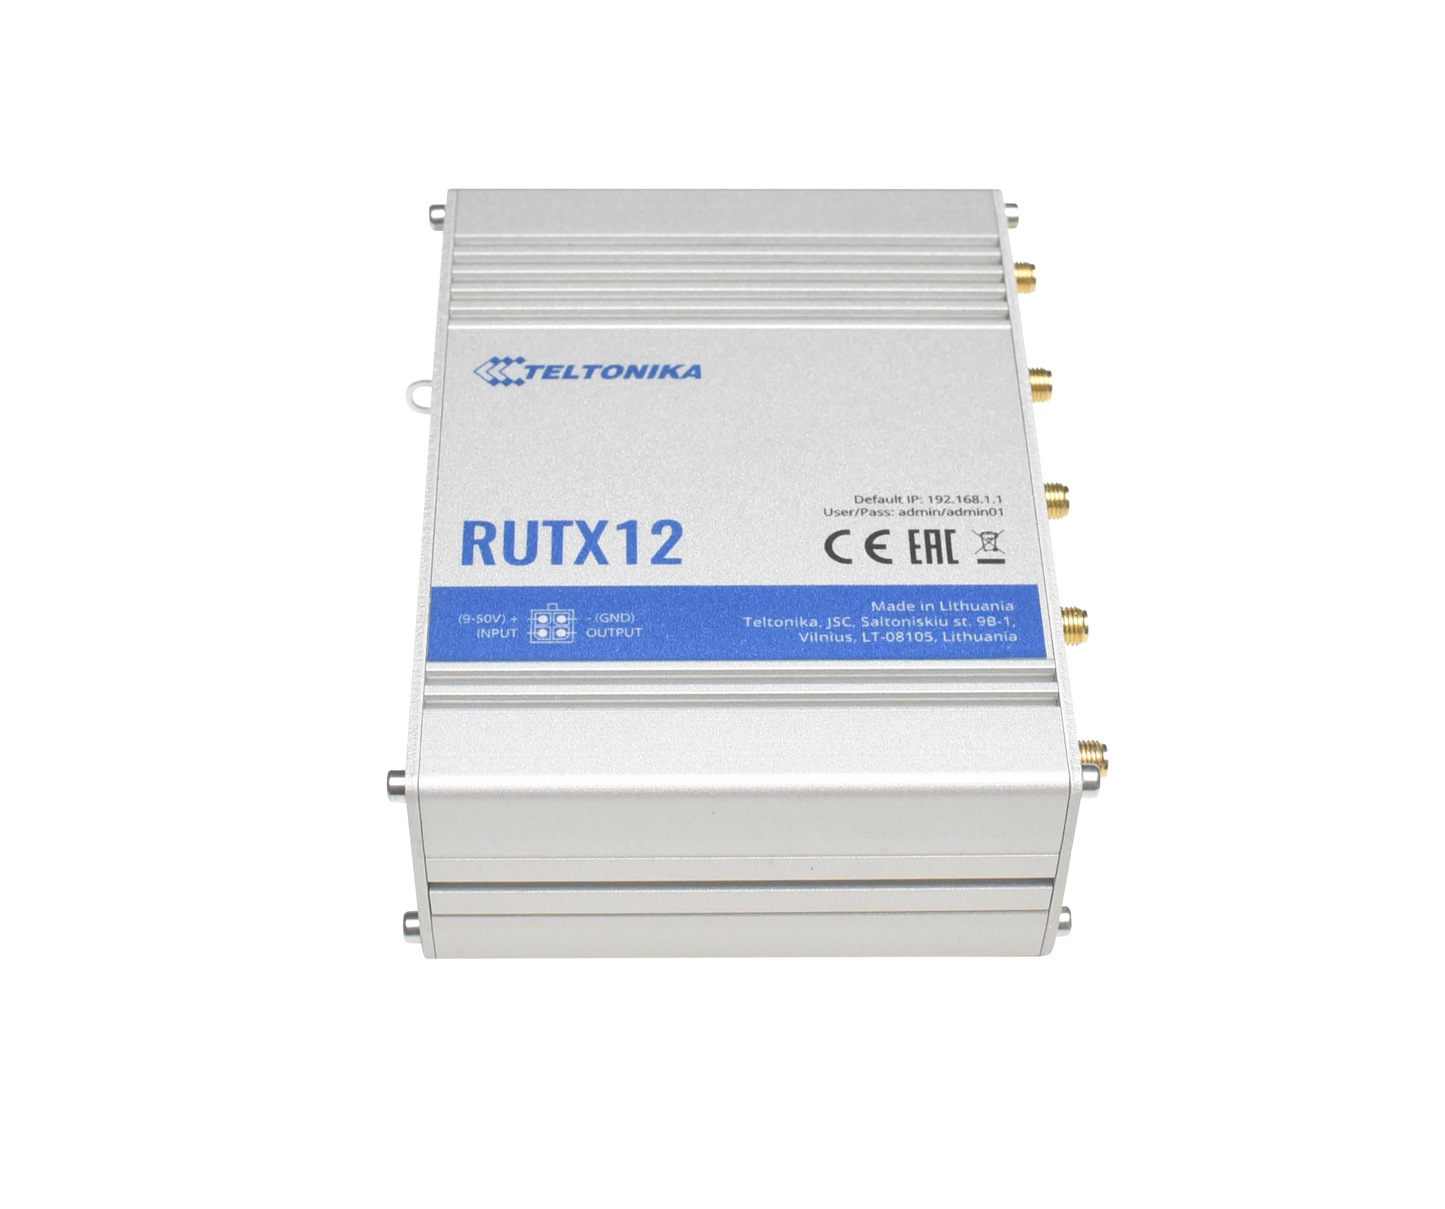 Teltonika Dual LTE Cat 6 Industrial Router - RUTX12